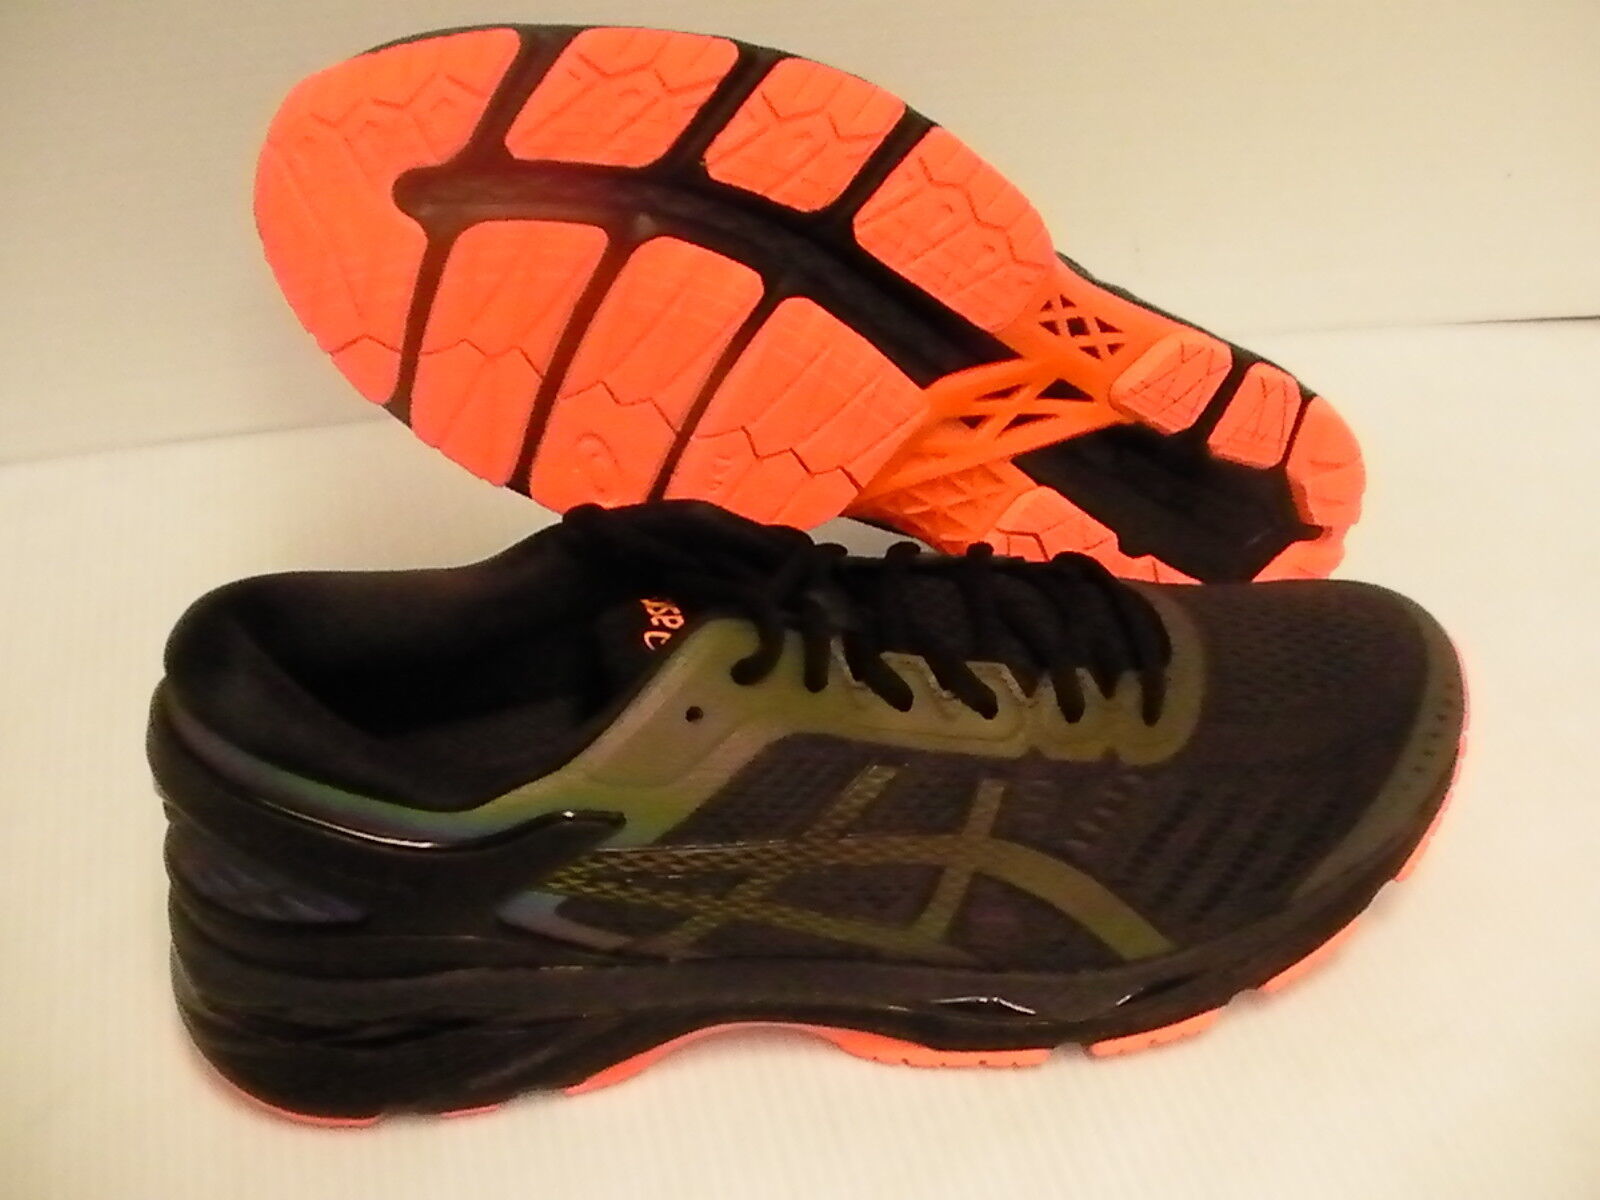 Primary image for Asics men's gel kayano 24 lite show running shoes phantom black size 8 us